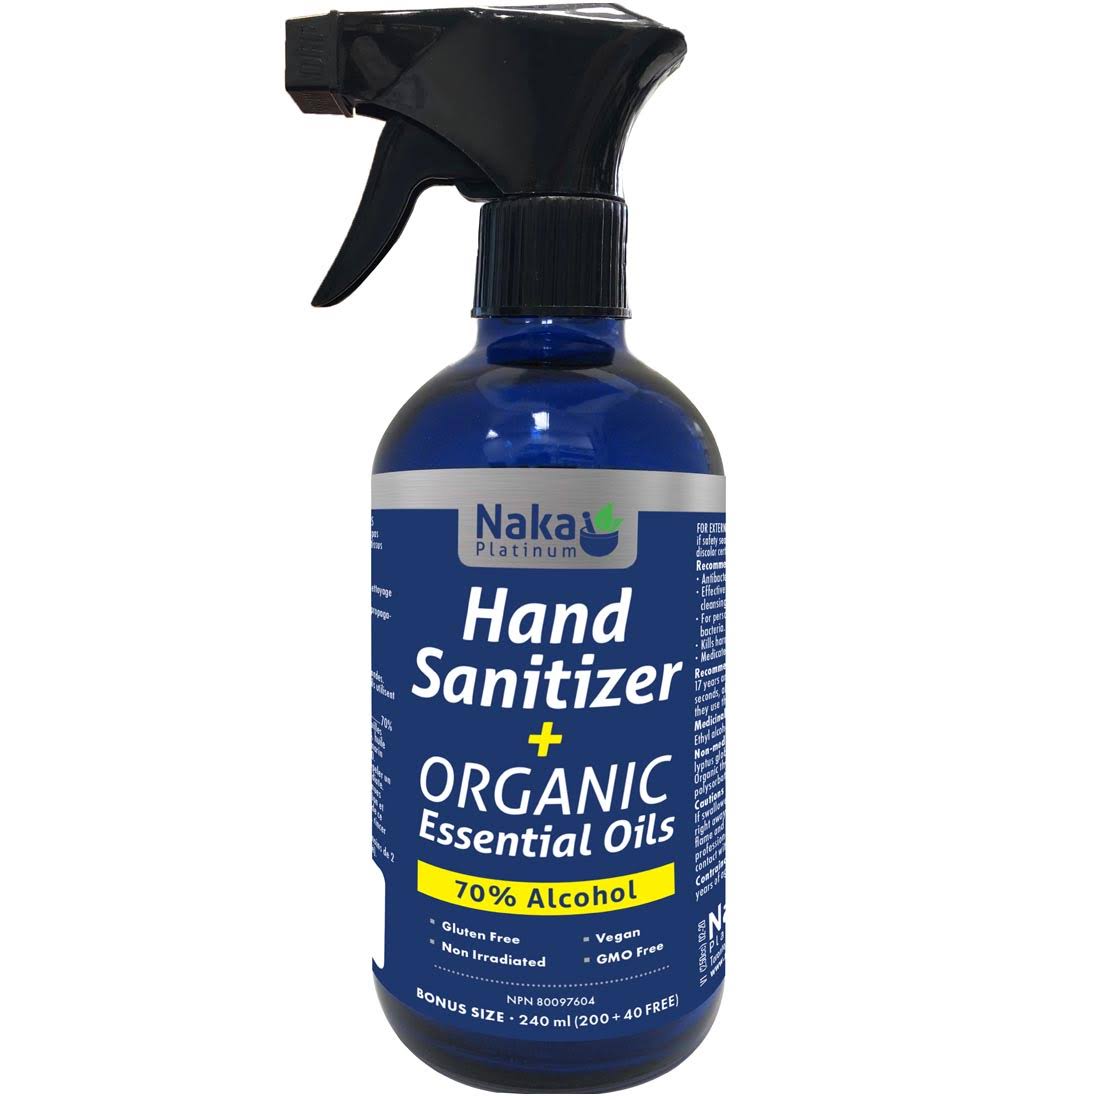 Naka Platinum Hand Sanitizer + Organic Essential Oils - 240 ml